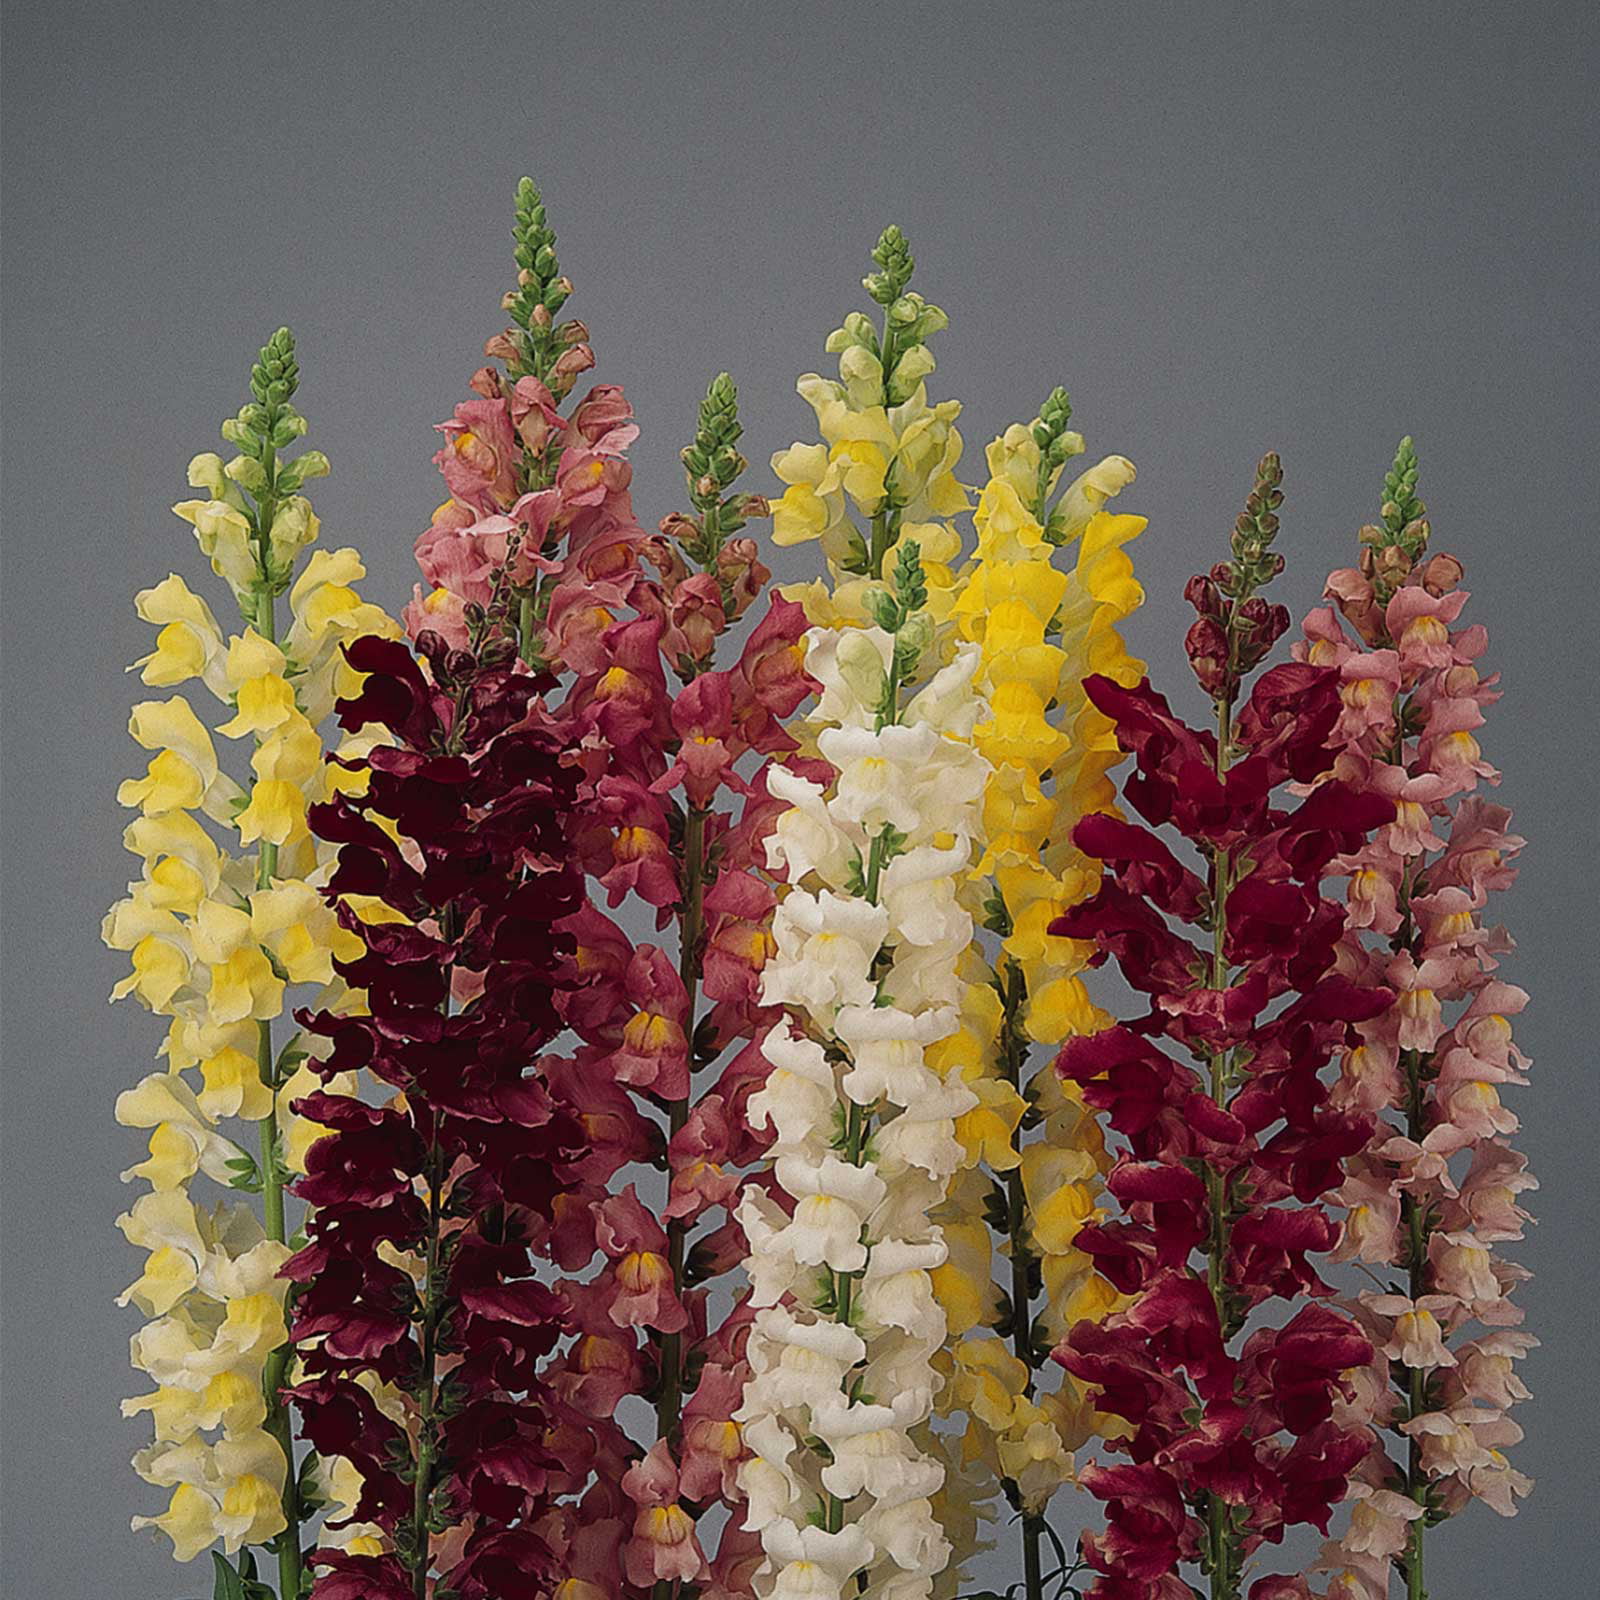 snapdragon flower seeds - rocket series f1 - 1000 seeds - mix color blooms  - annual flower garden - border flowers